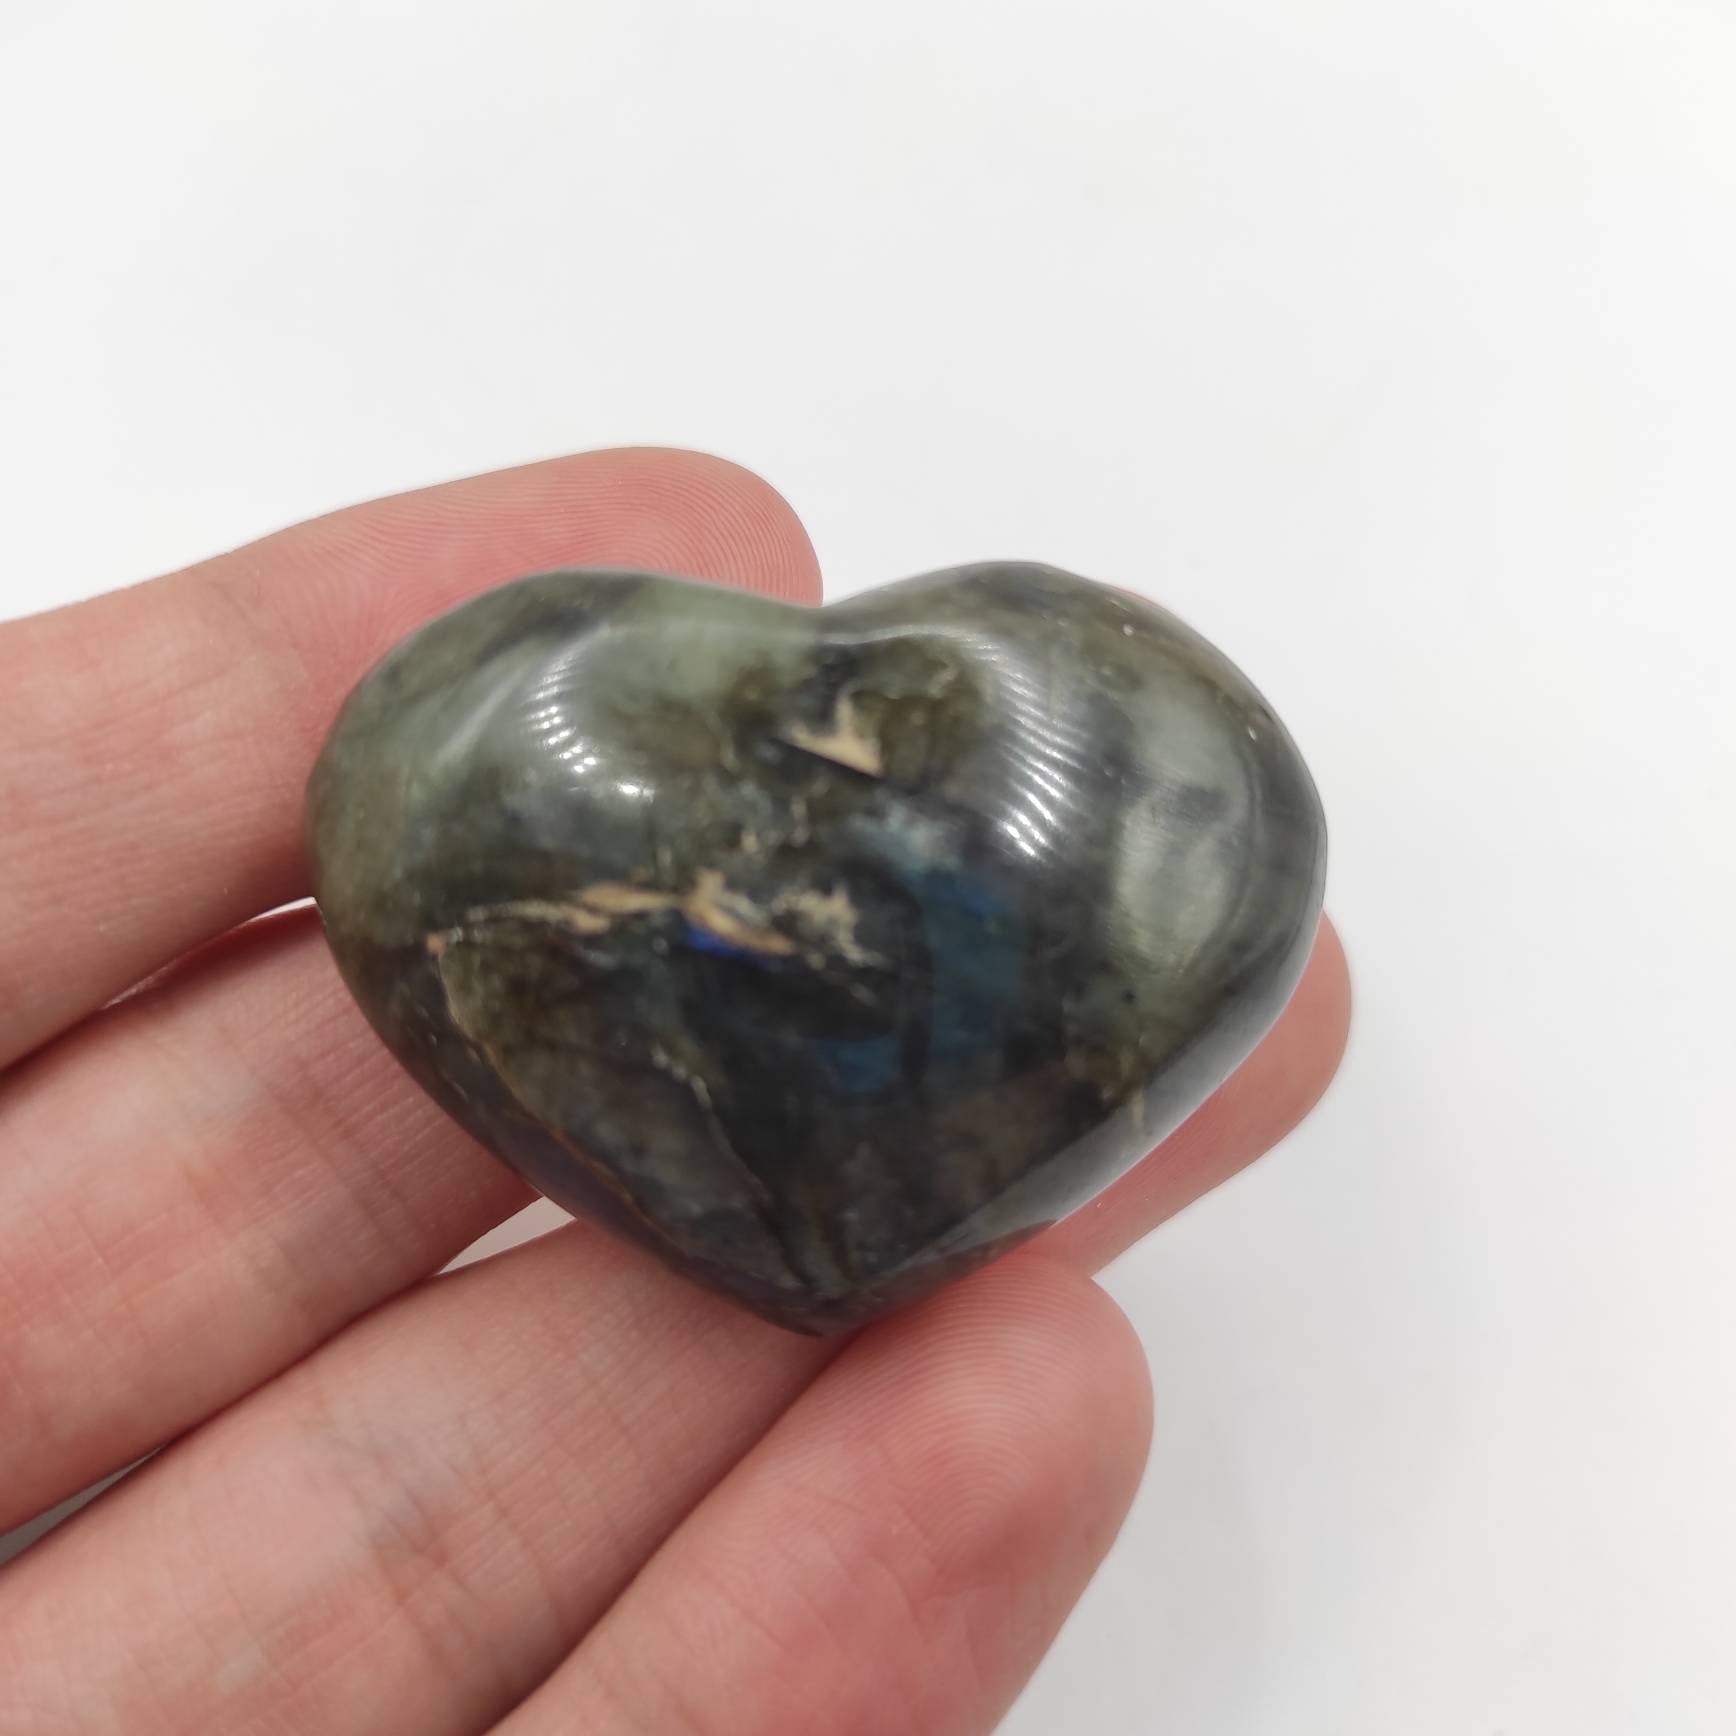 30g Mini Blue Labradorite Heart Stone - Polished Labradorite Crystal - Blue Labradorite from Madagascar - Natural Crystal Specimen